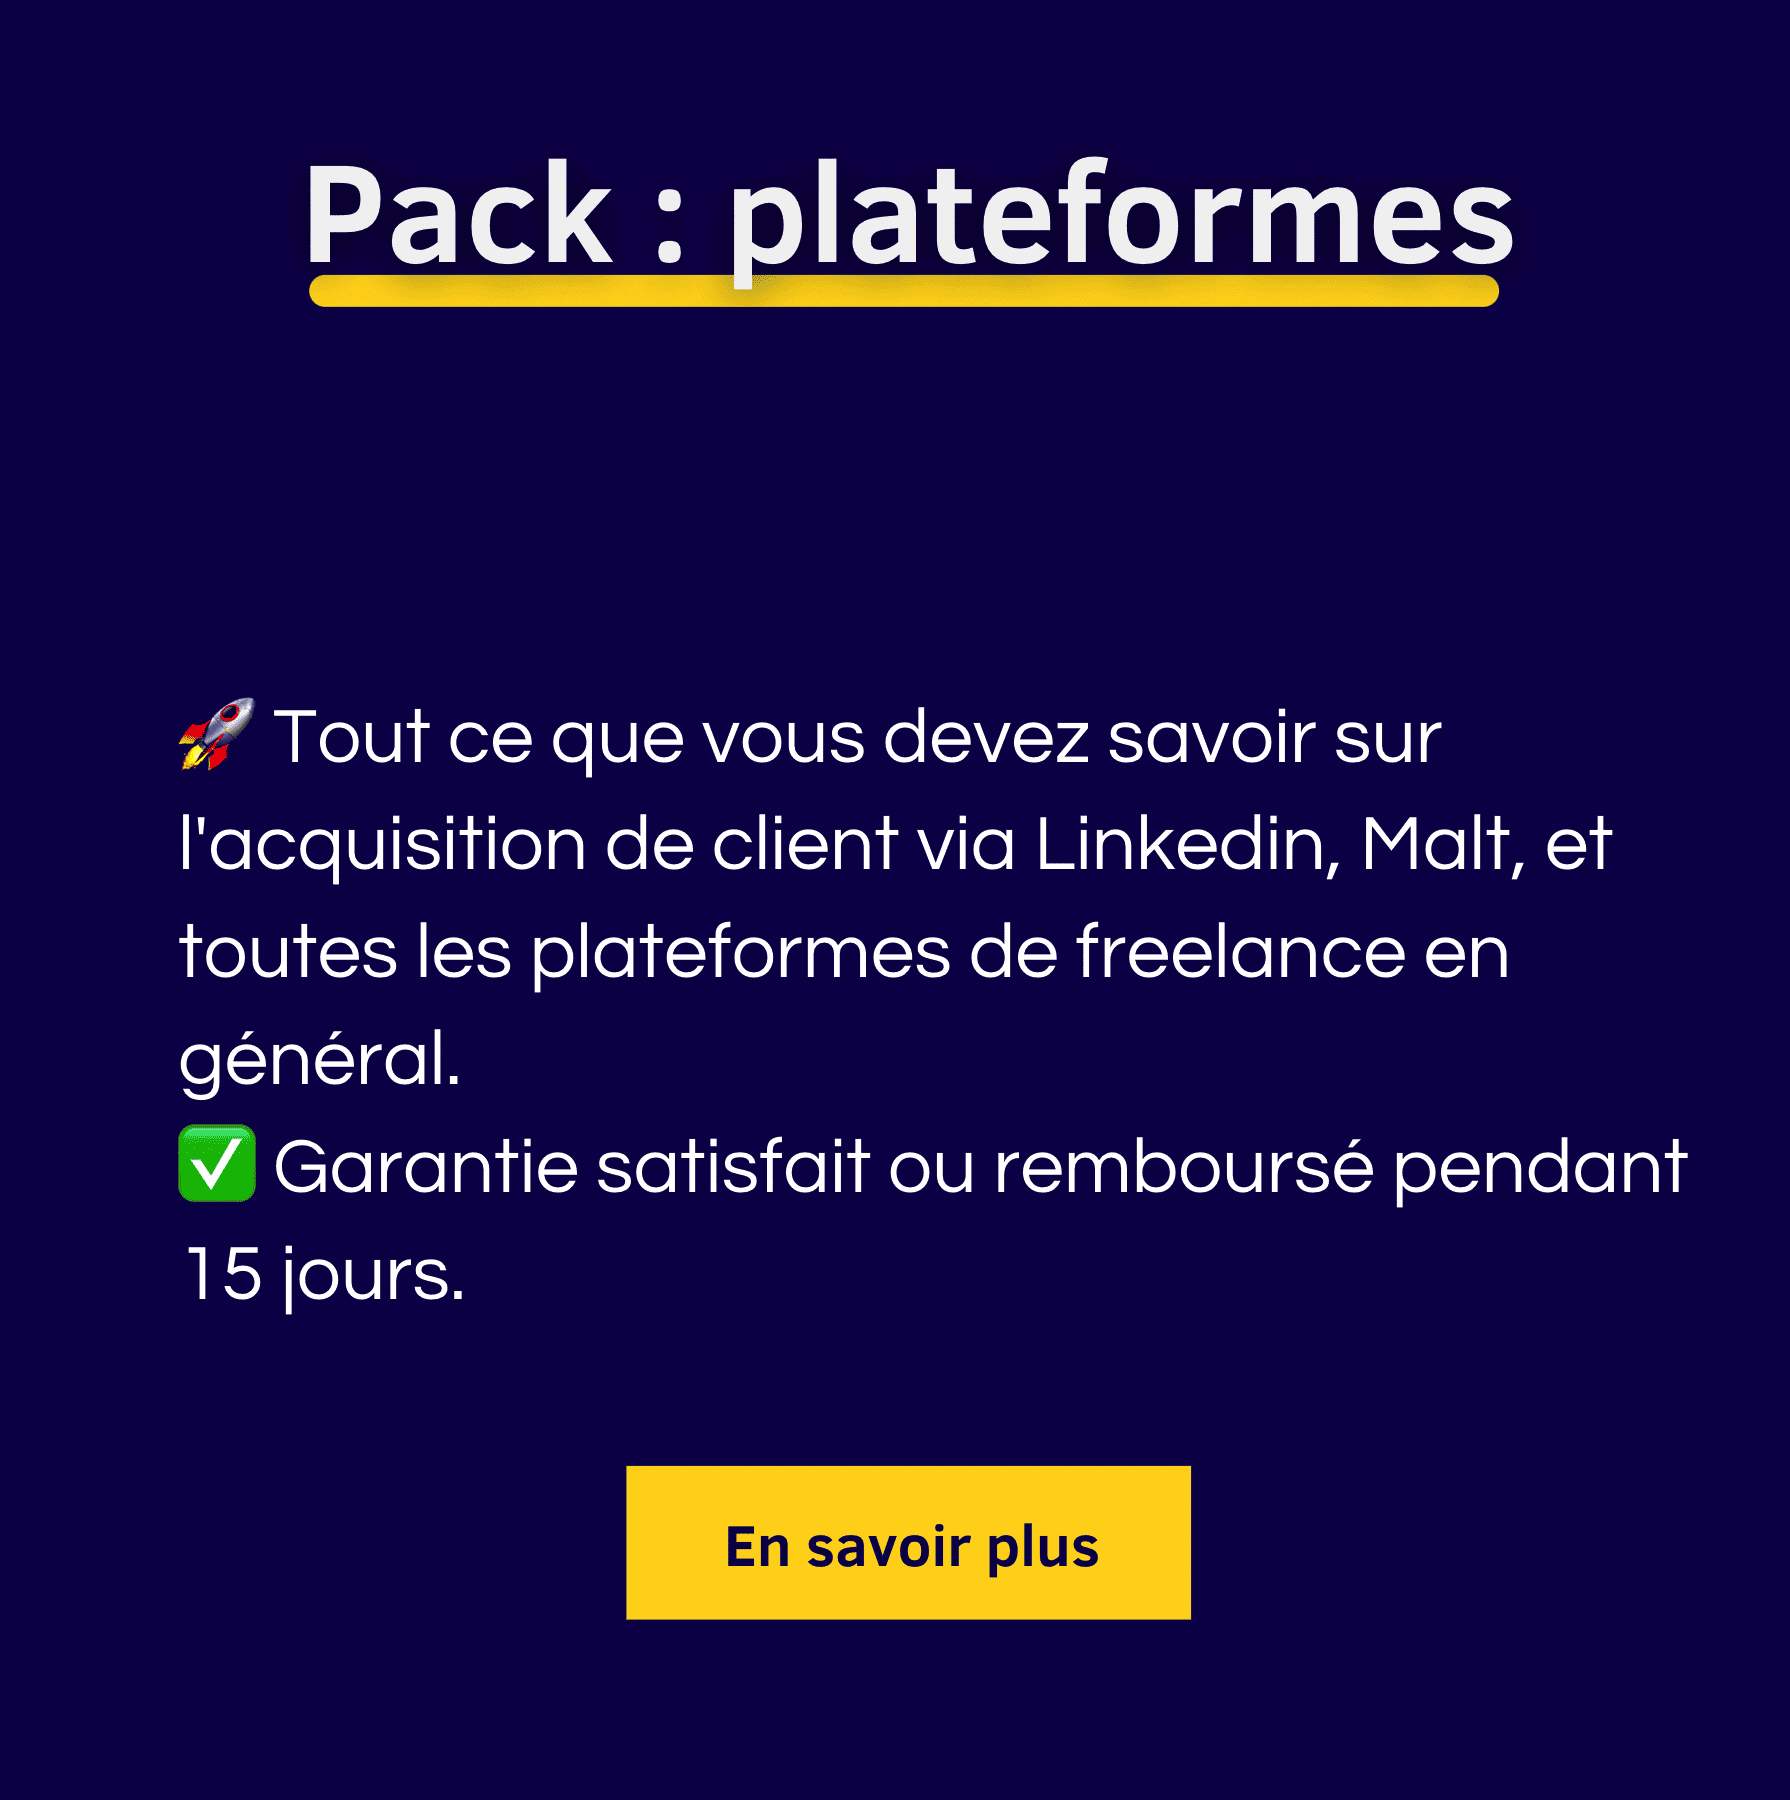 Pack : plateformes de freelance